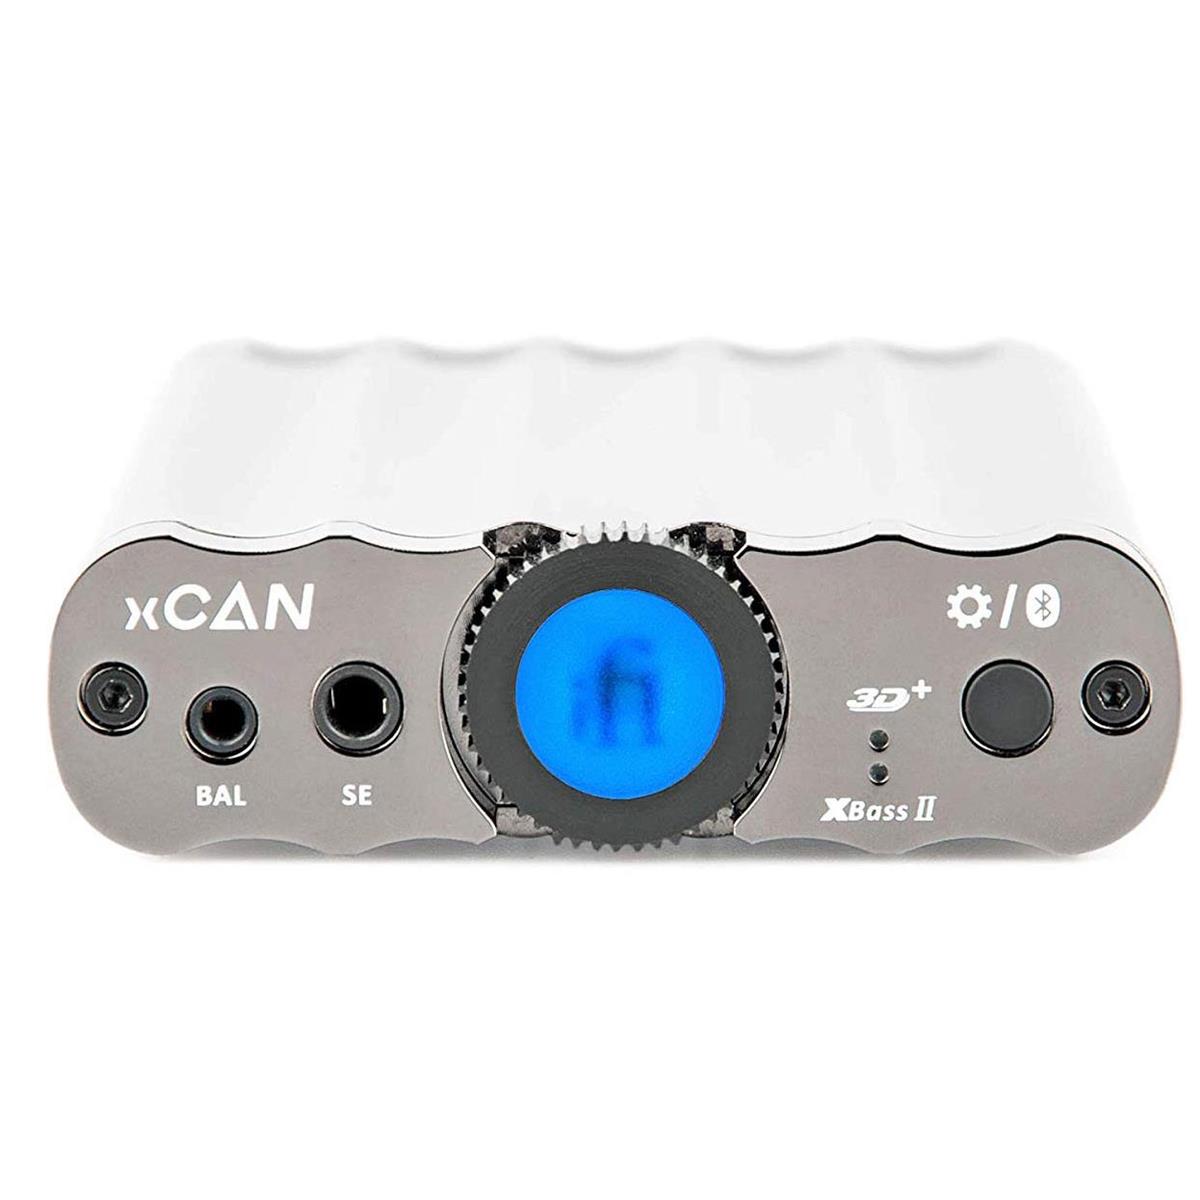 iFi AUDIO xCAN Portable Balanced Bluetooth Headphones Amplifier $135 + free s/h at Adorama